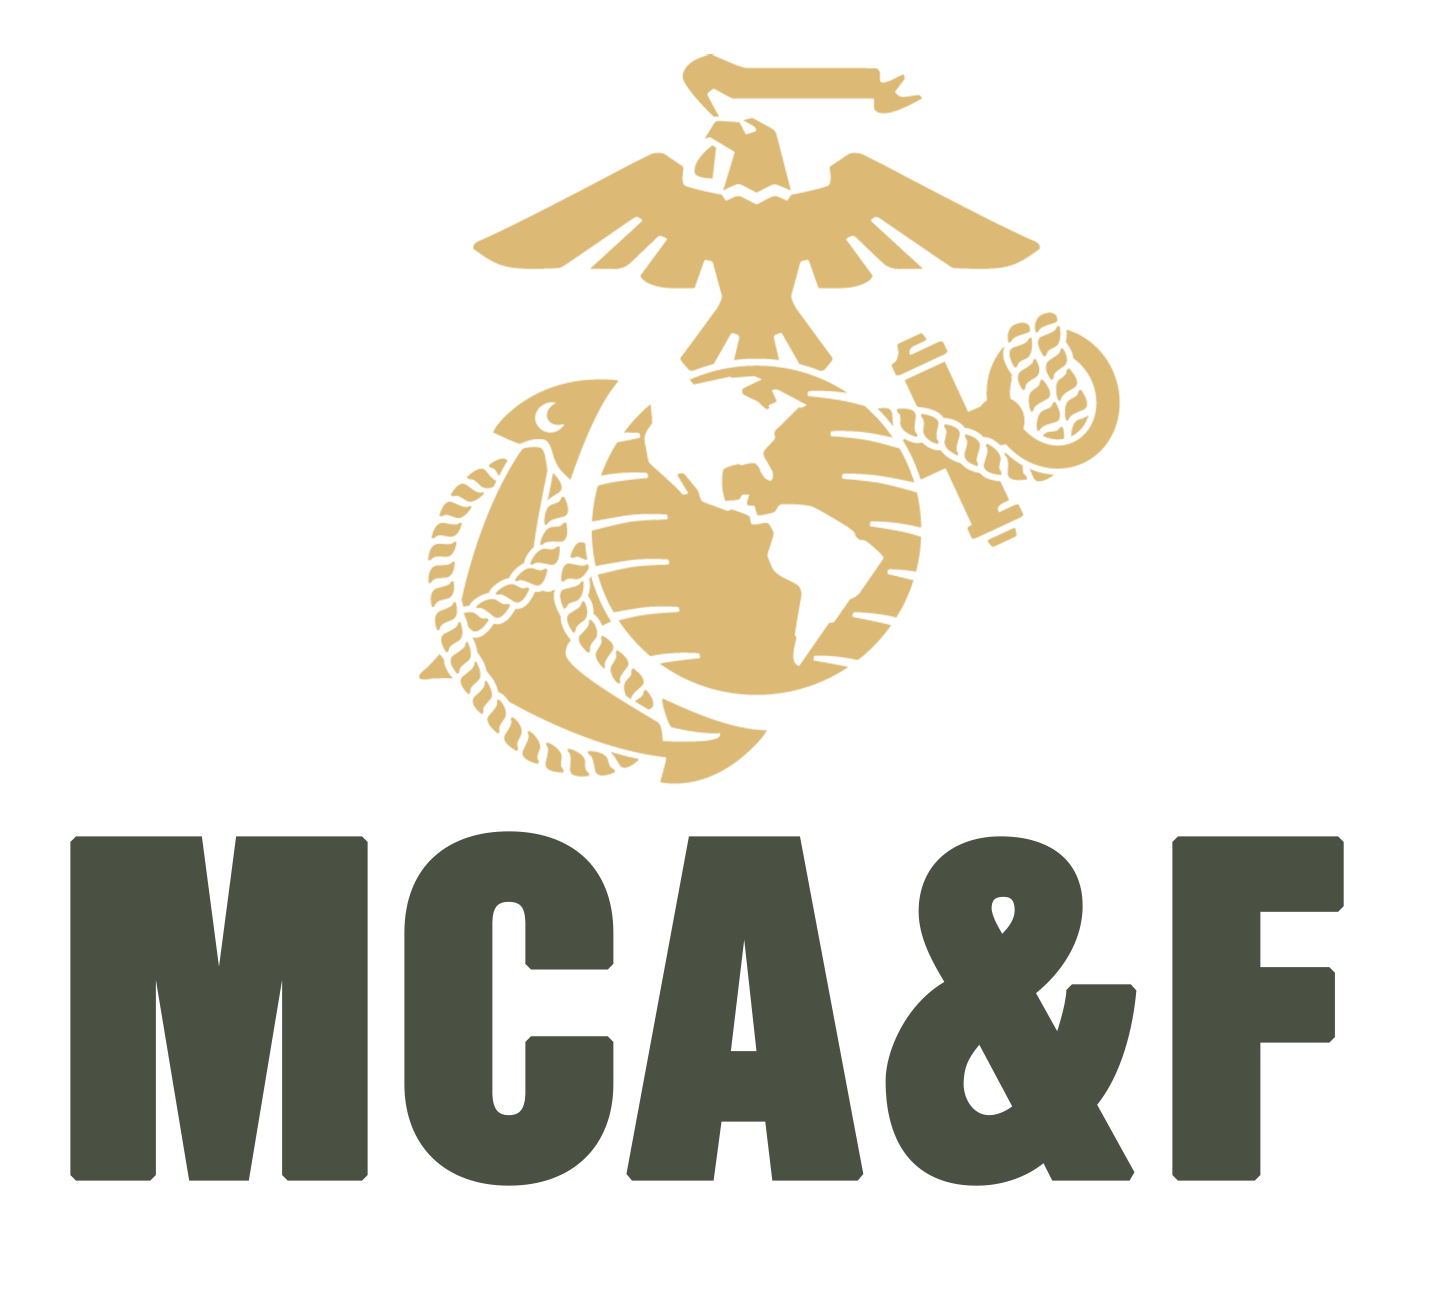 www.mca-marines.org